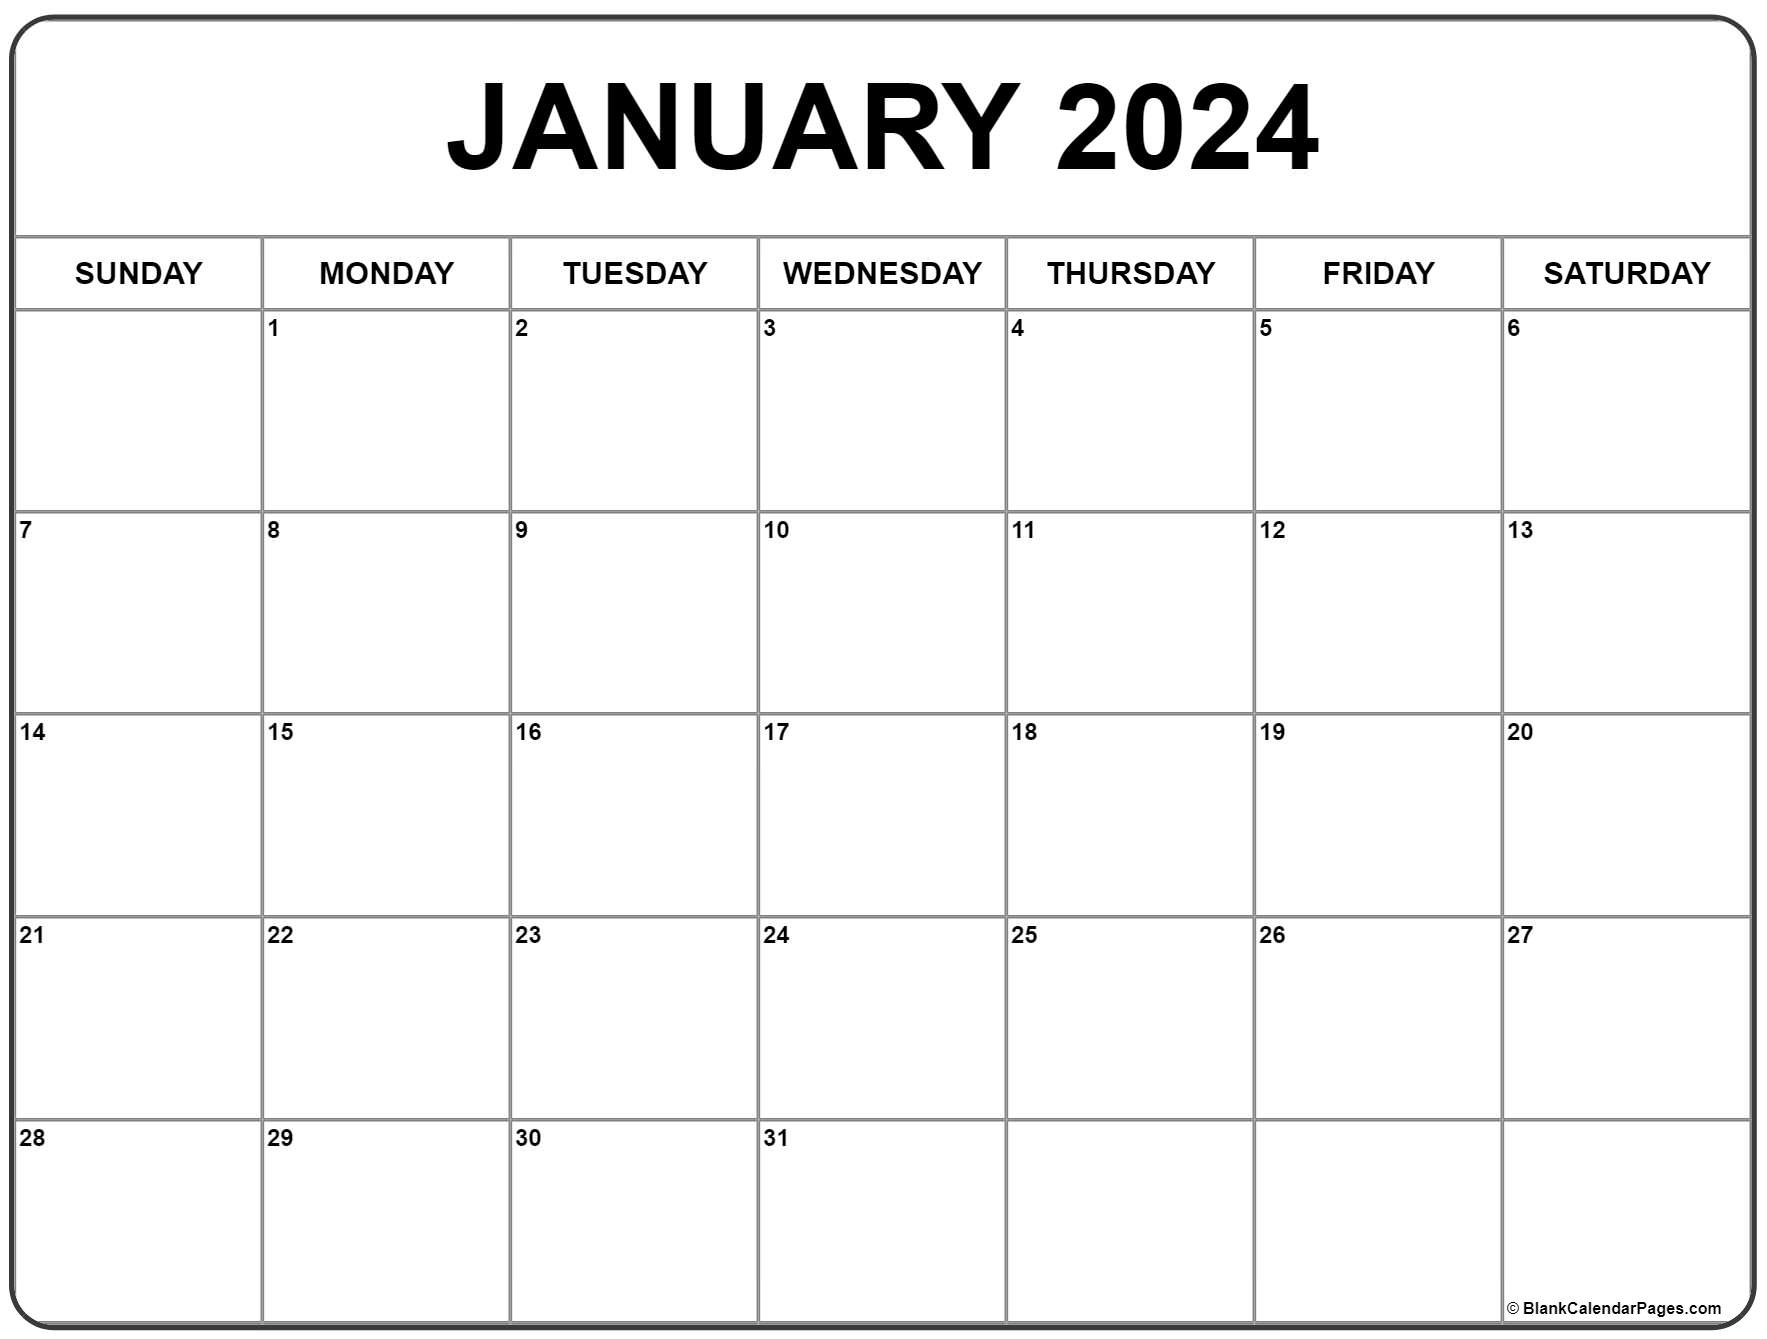 January 2024 Calendar | Free Printable Calendar for 2024 Calendar Printable Monthly